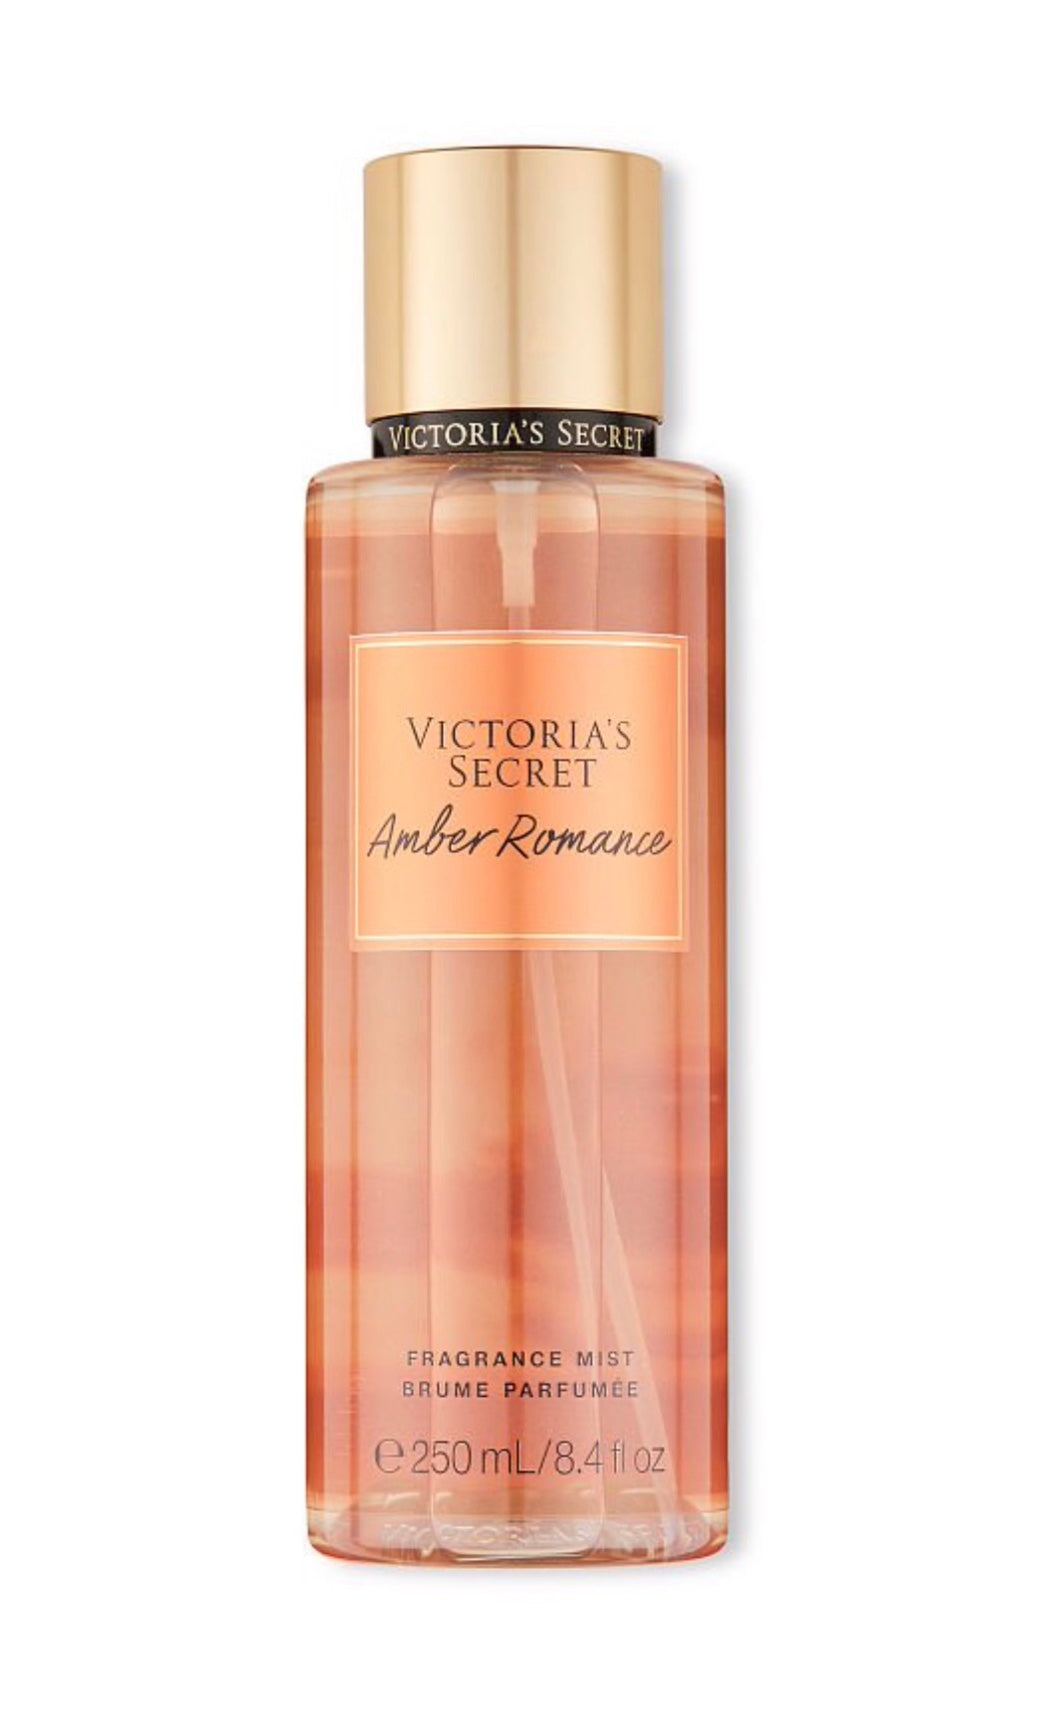 VICTORIA’S SECRET/ Fragrance Mist/ Amber Romance/ 8.4 oz.